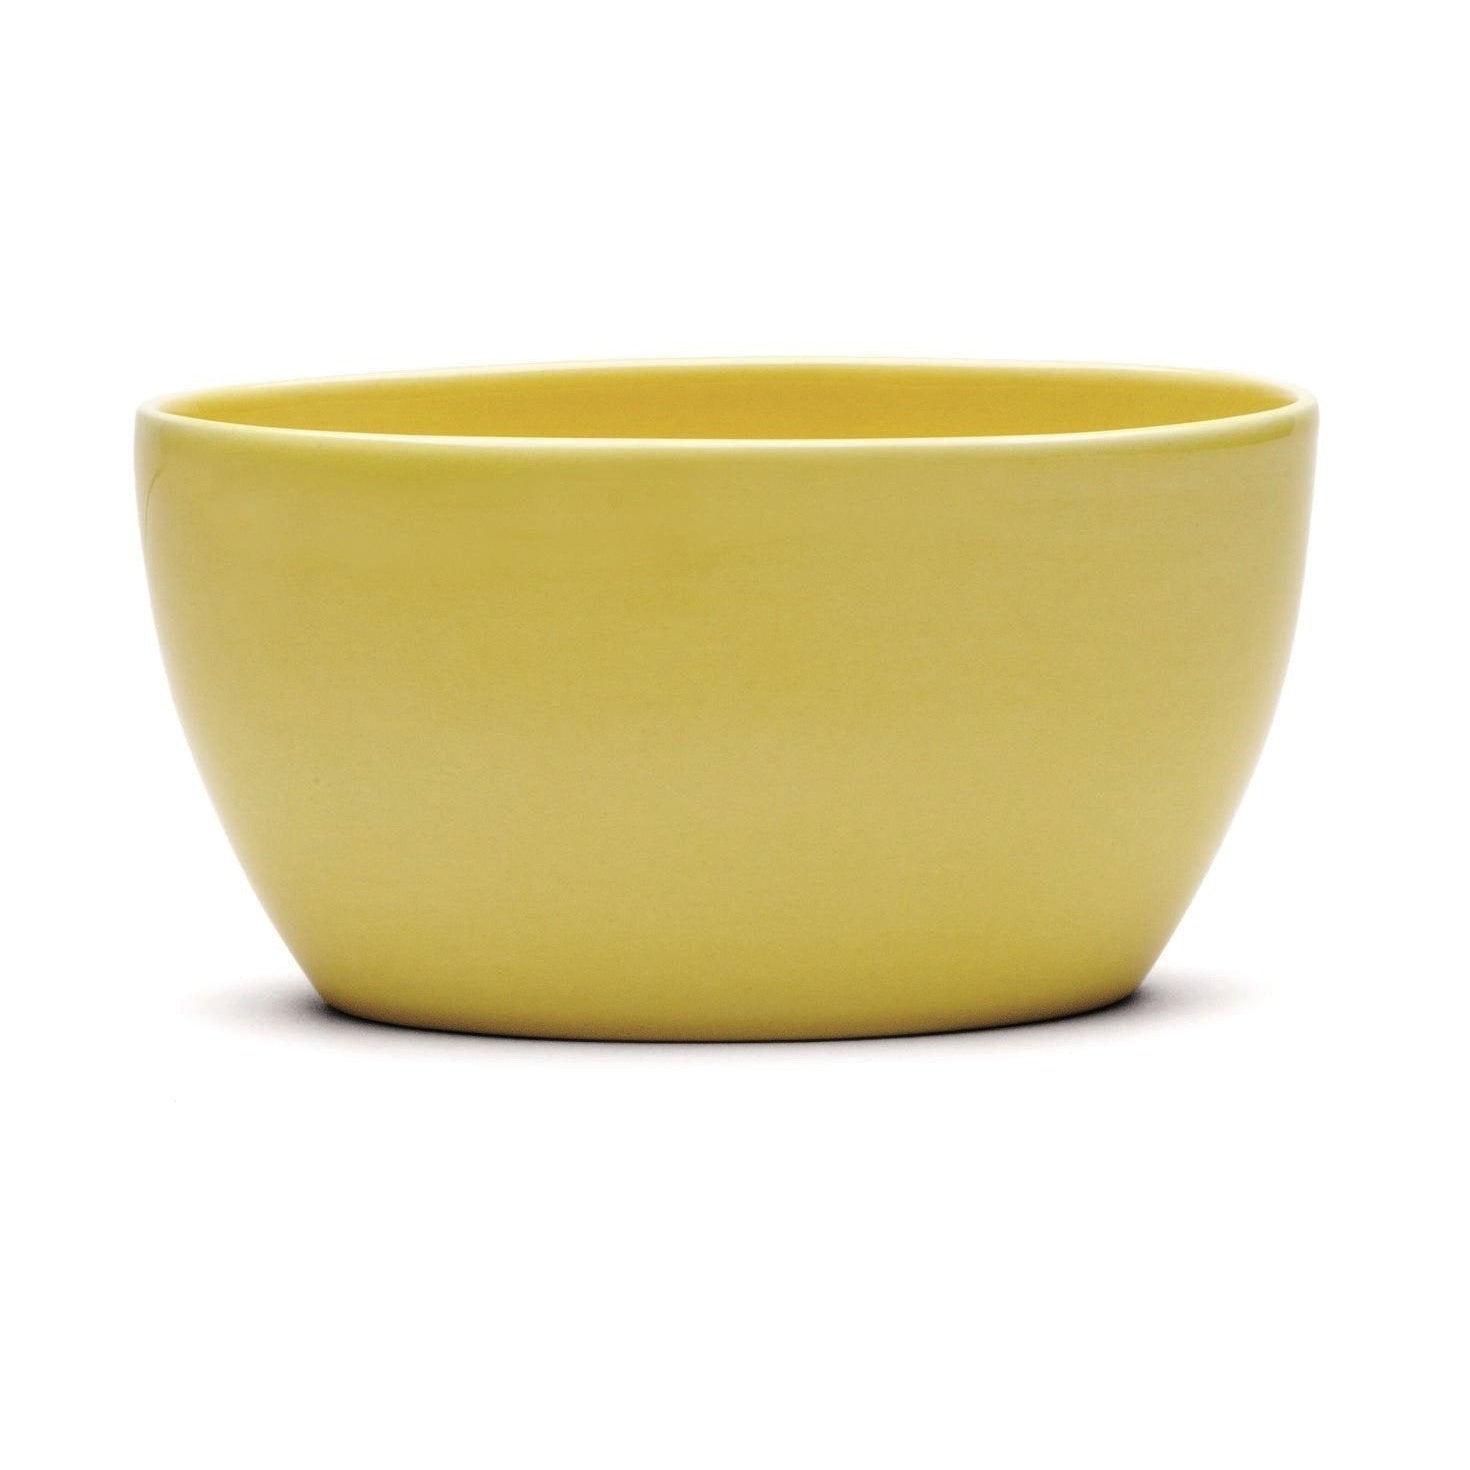 Kähler Ursula Bowl żółty, średni